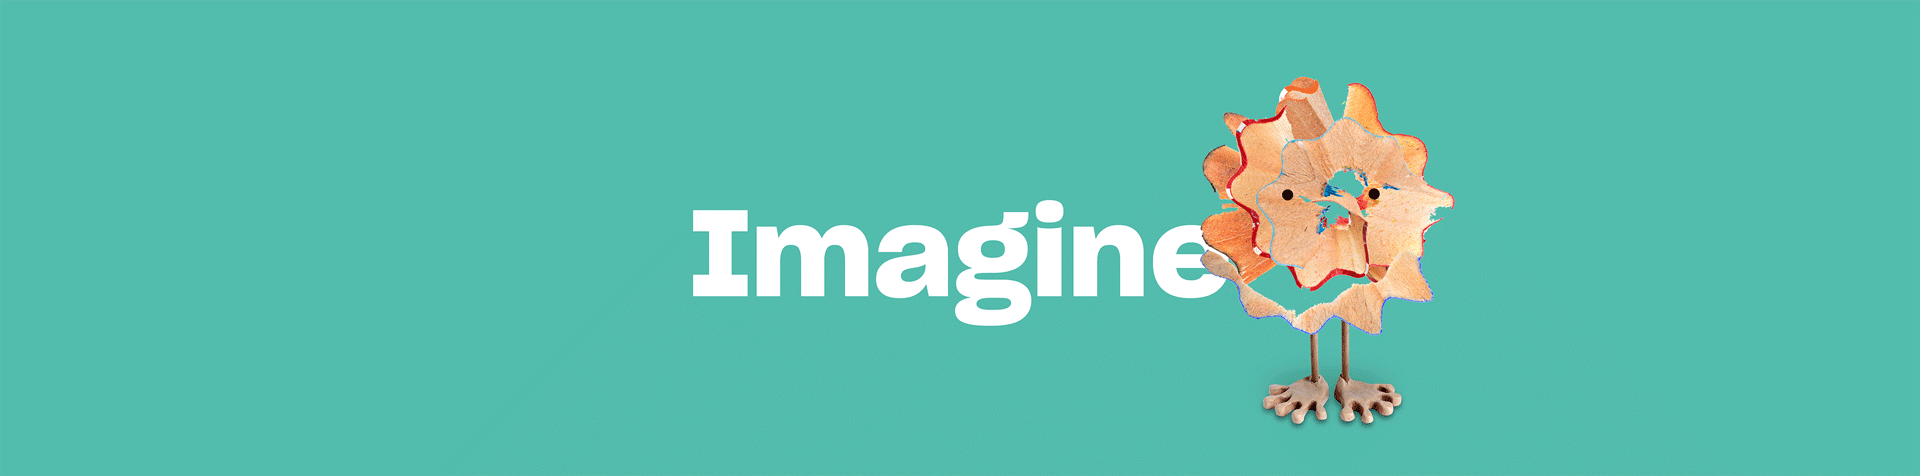 Animation - Imagine